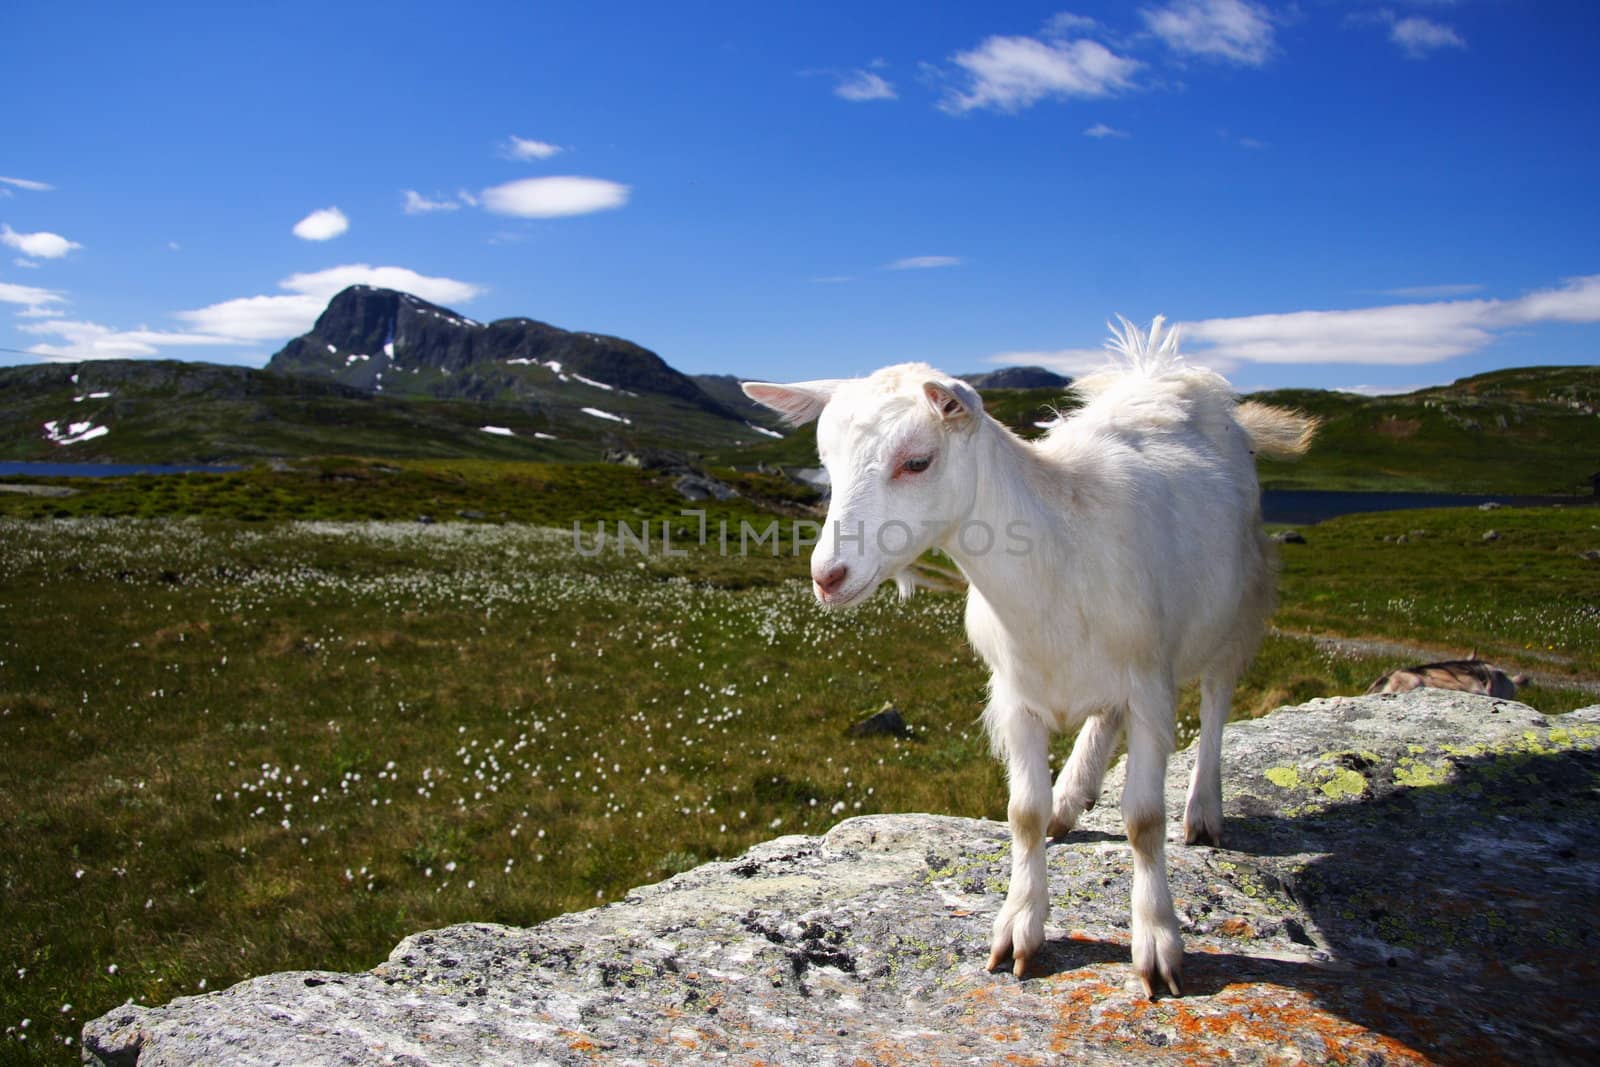 Goat baby standing on a rock in Jotunheimen, Norway.